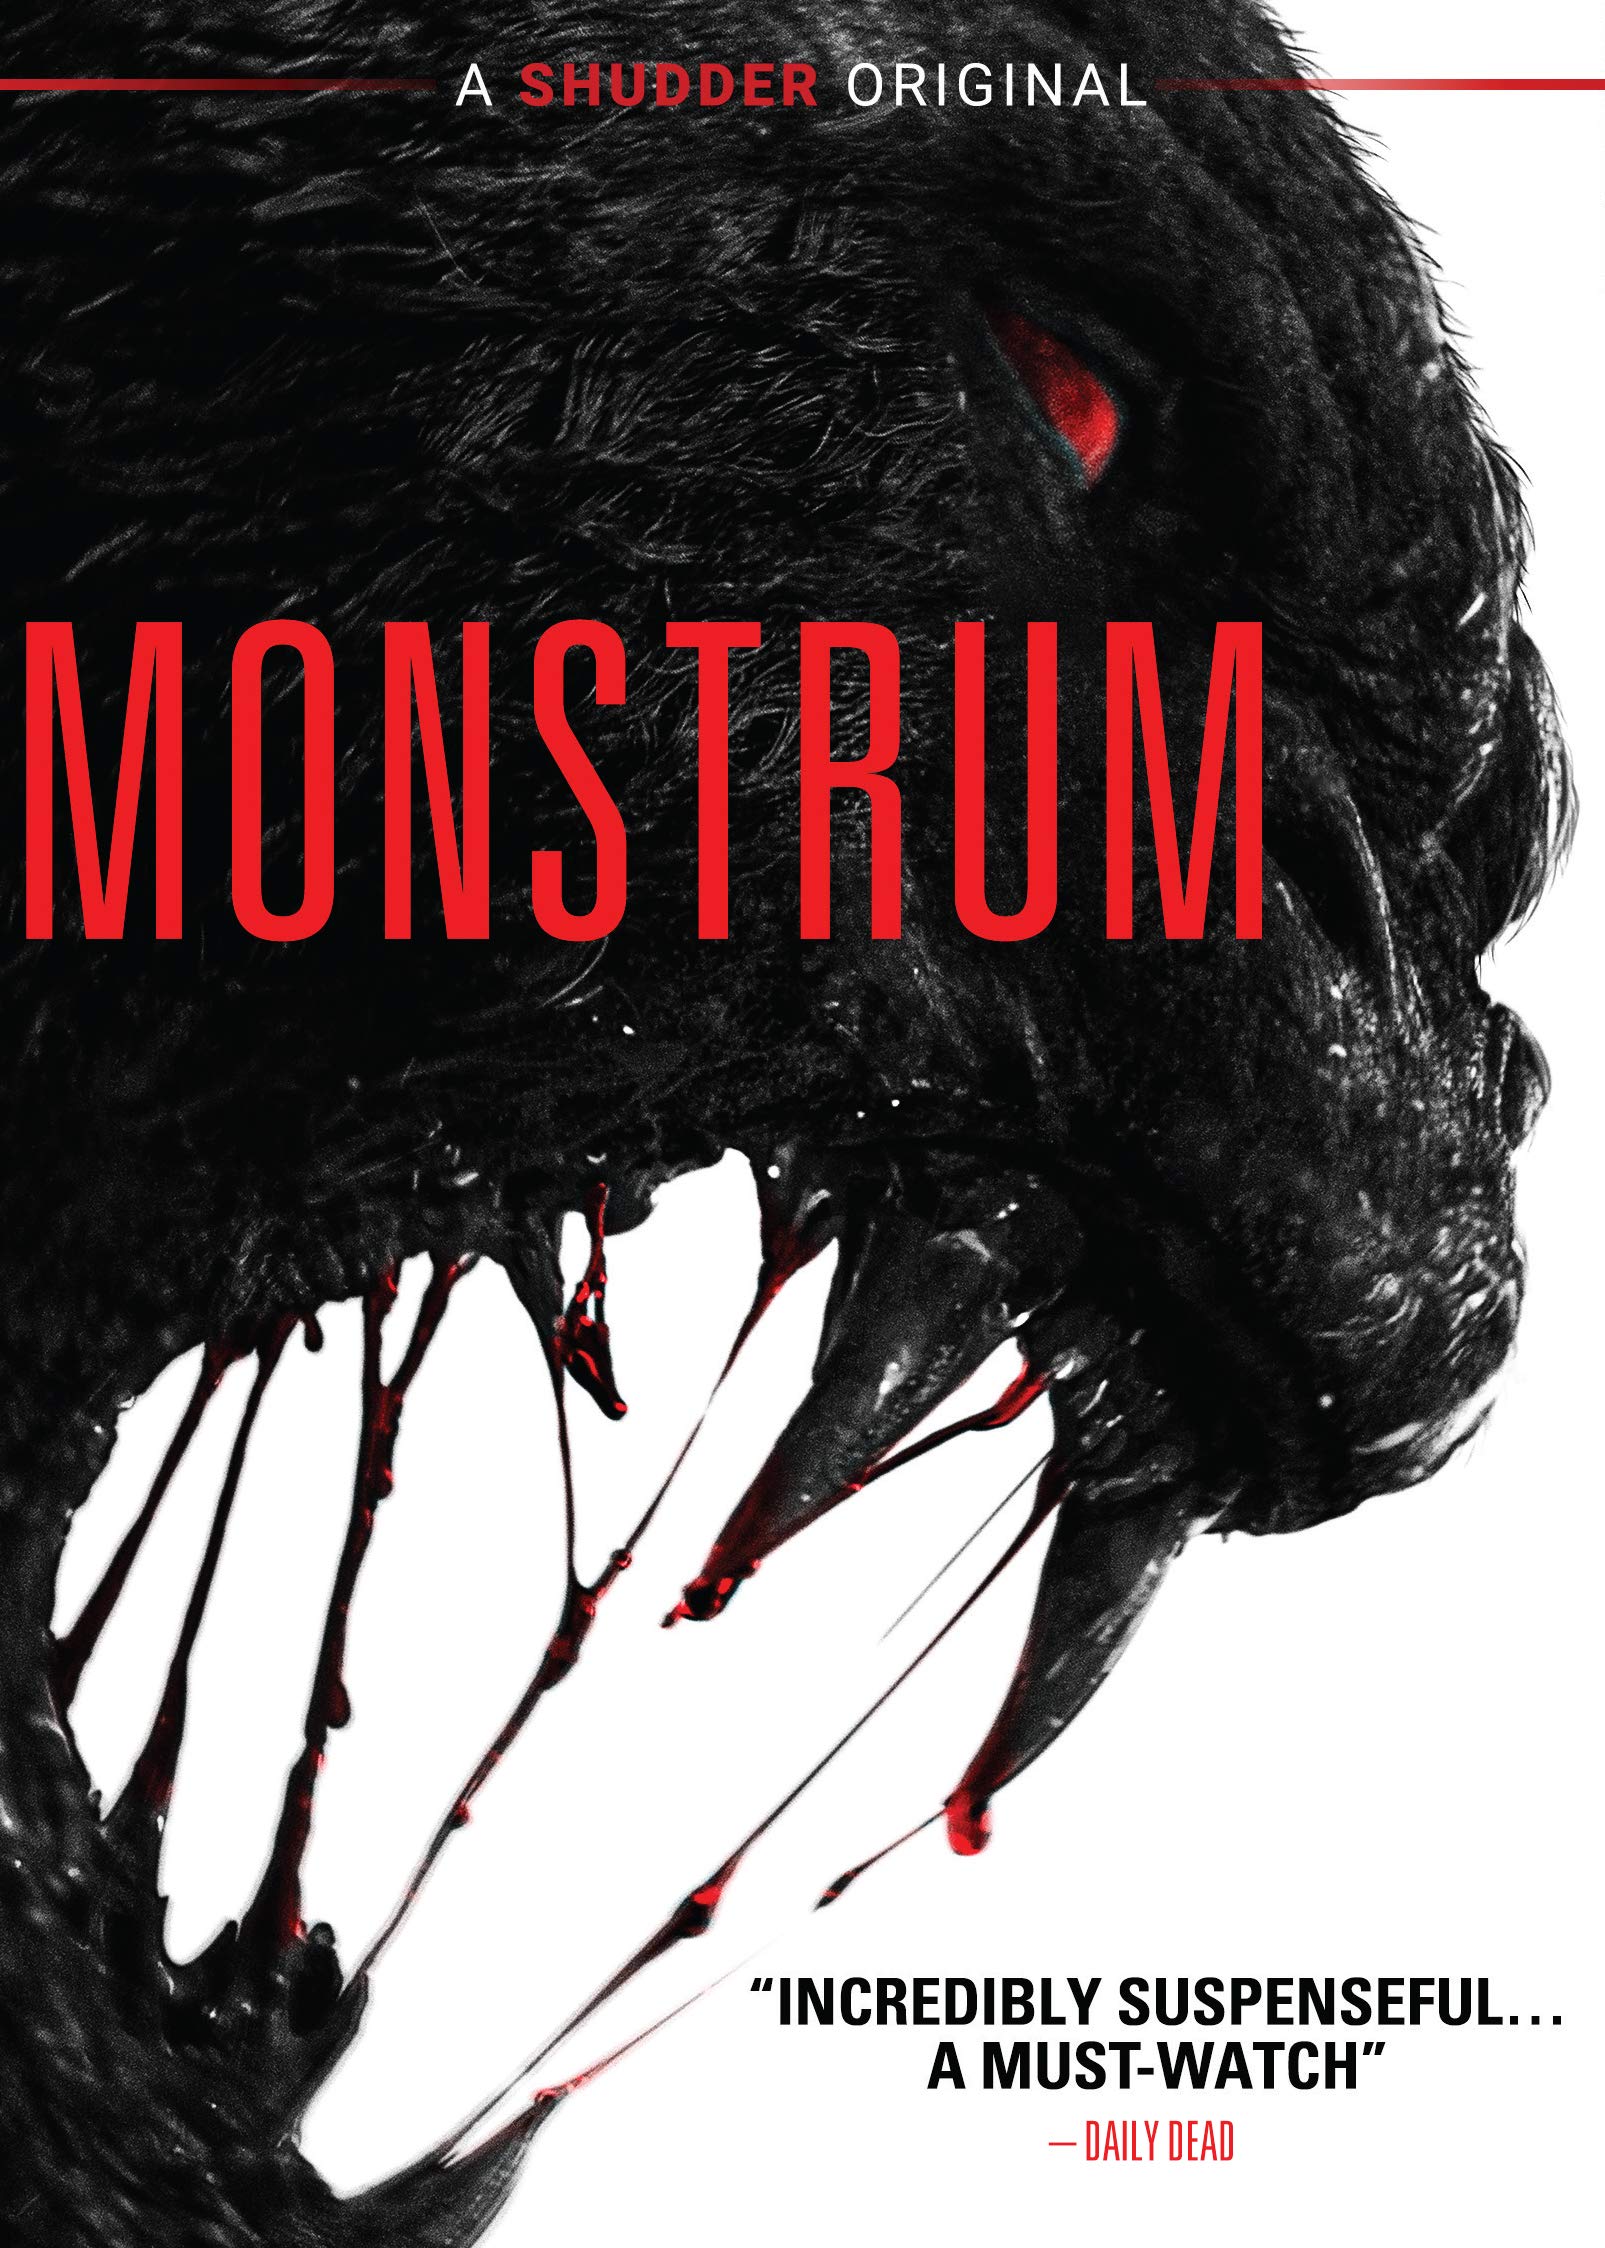 Monstrum DVD Release Date November 17, 2020